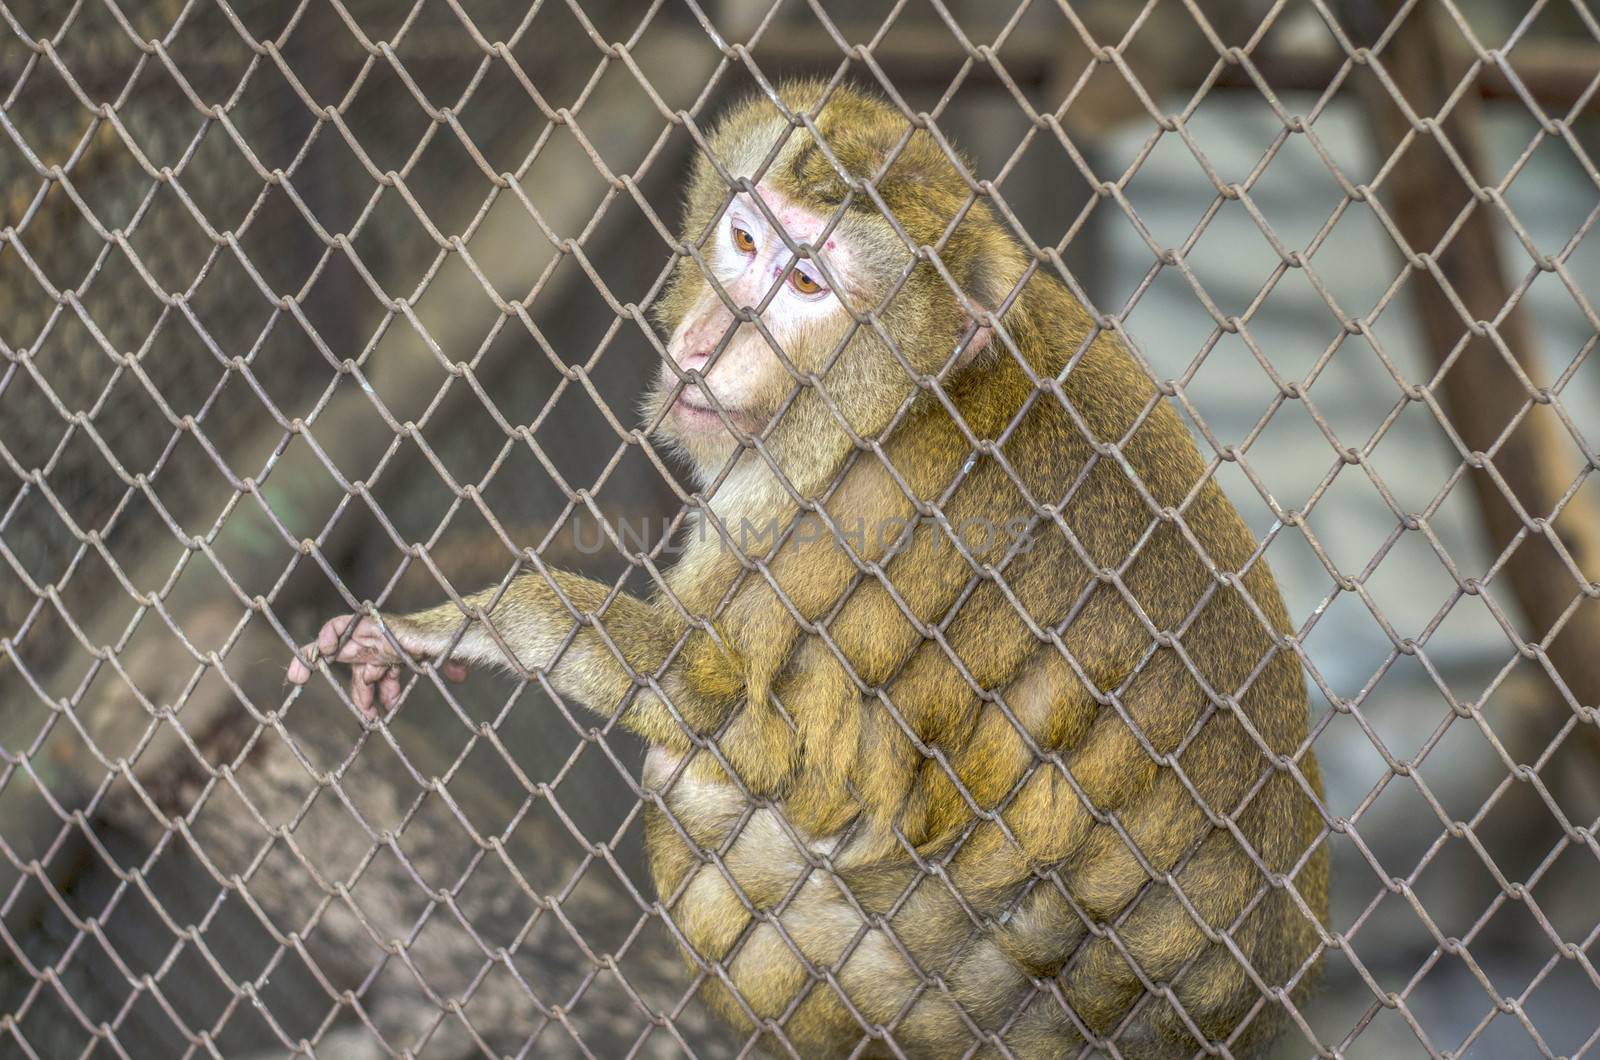 sad monkey in cage  by ammza12